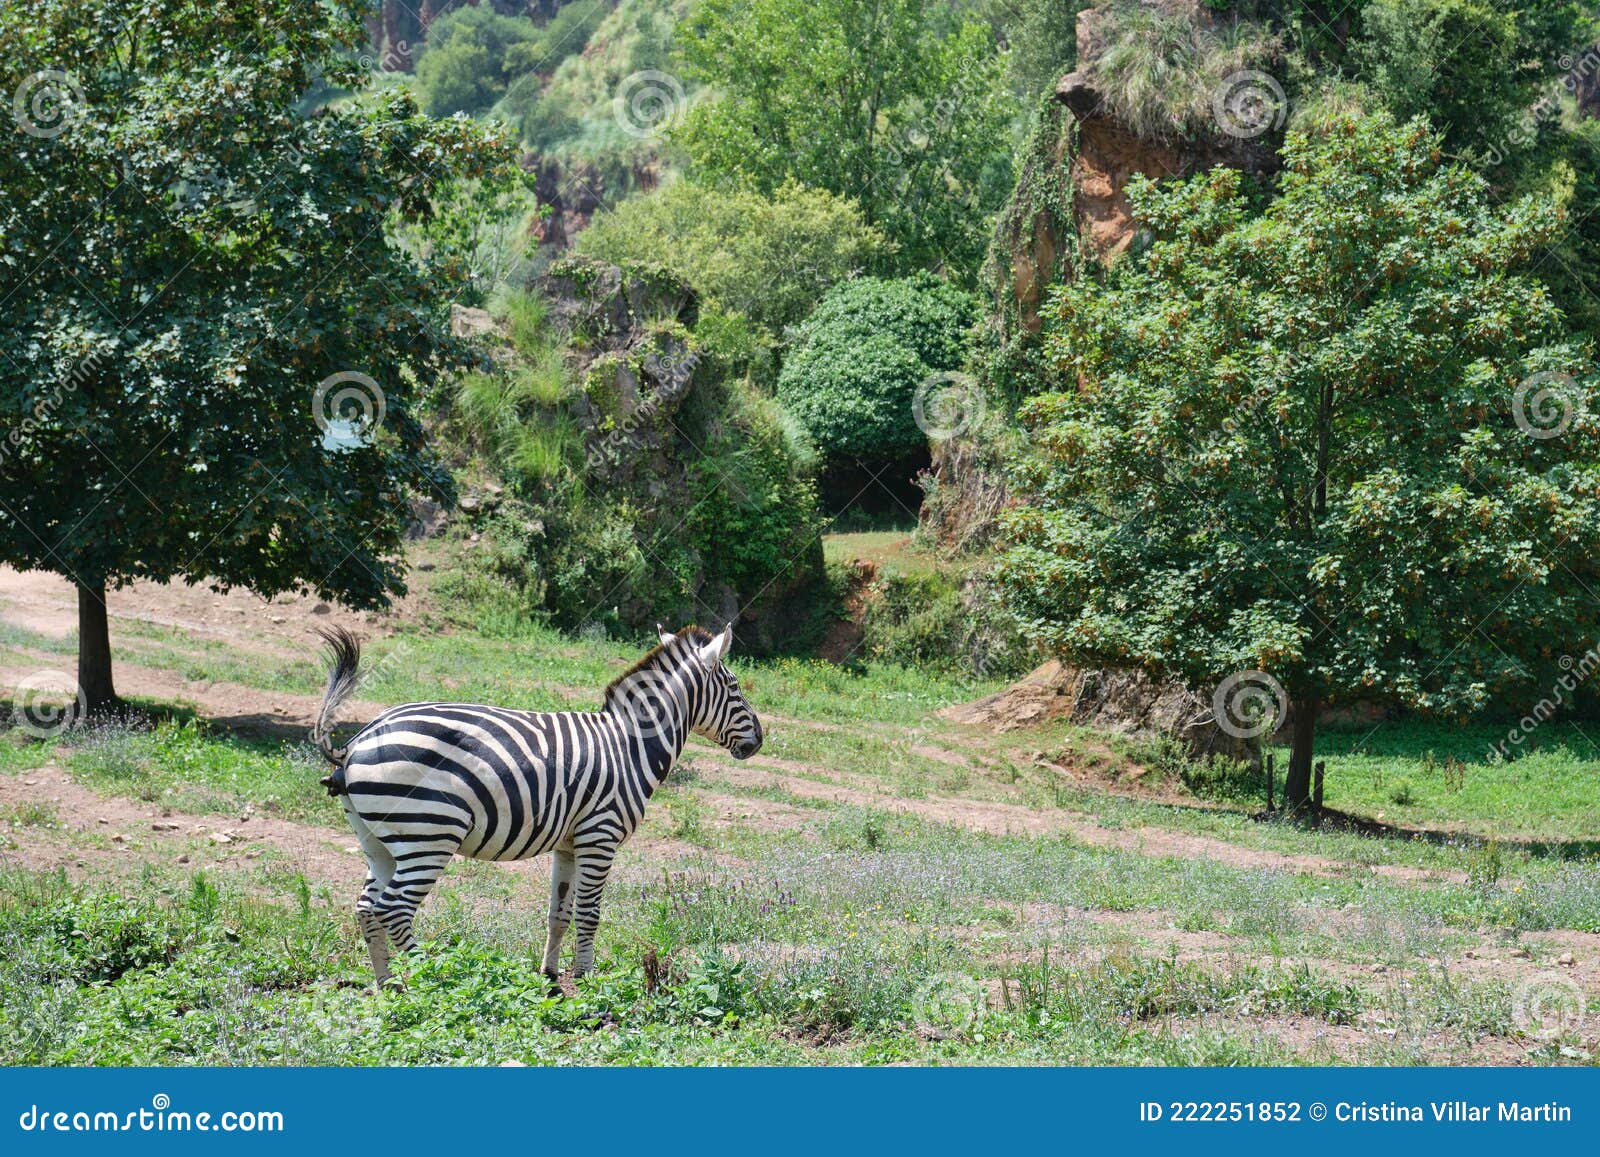 plains zebra, equus quagga, defecating in cabarceno natural park in cantabria